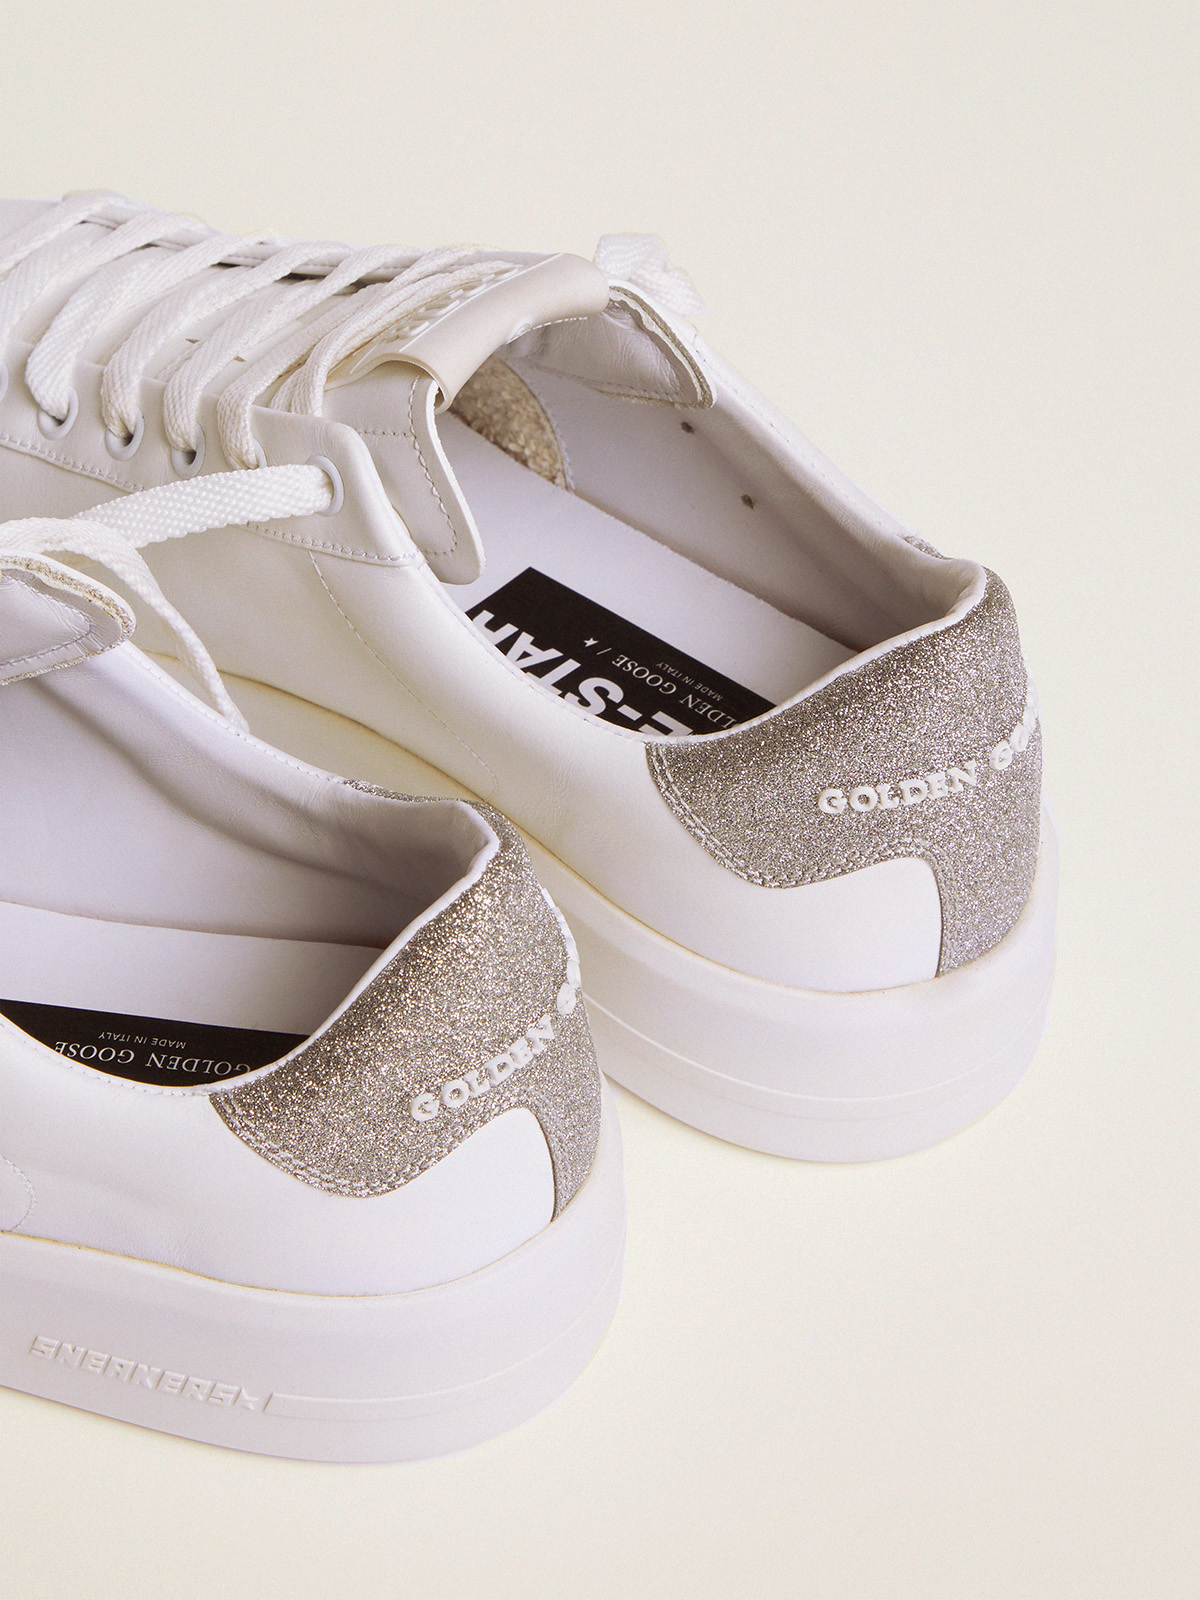 Women\'s Purestar sneakers with glittery silver heel tab | Golden Goose